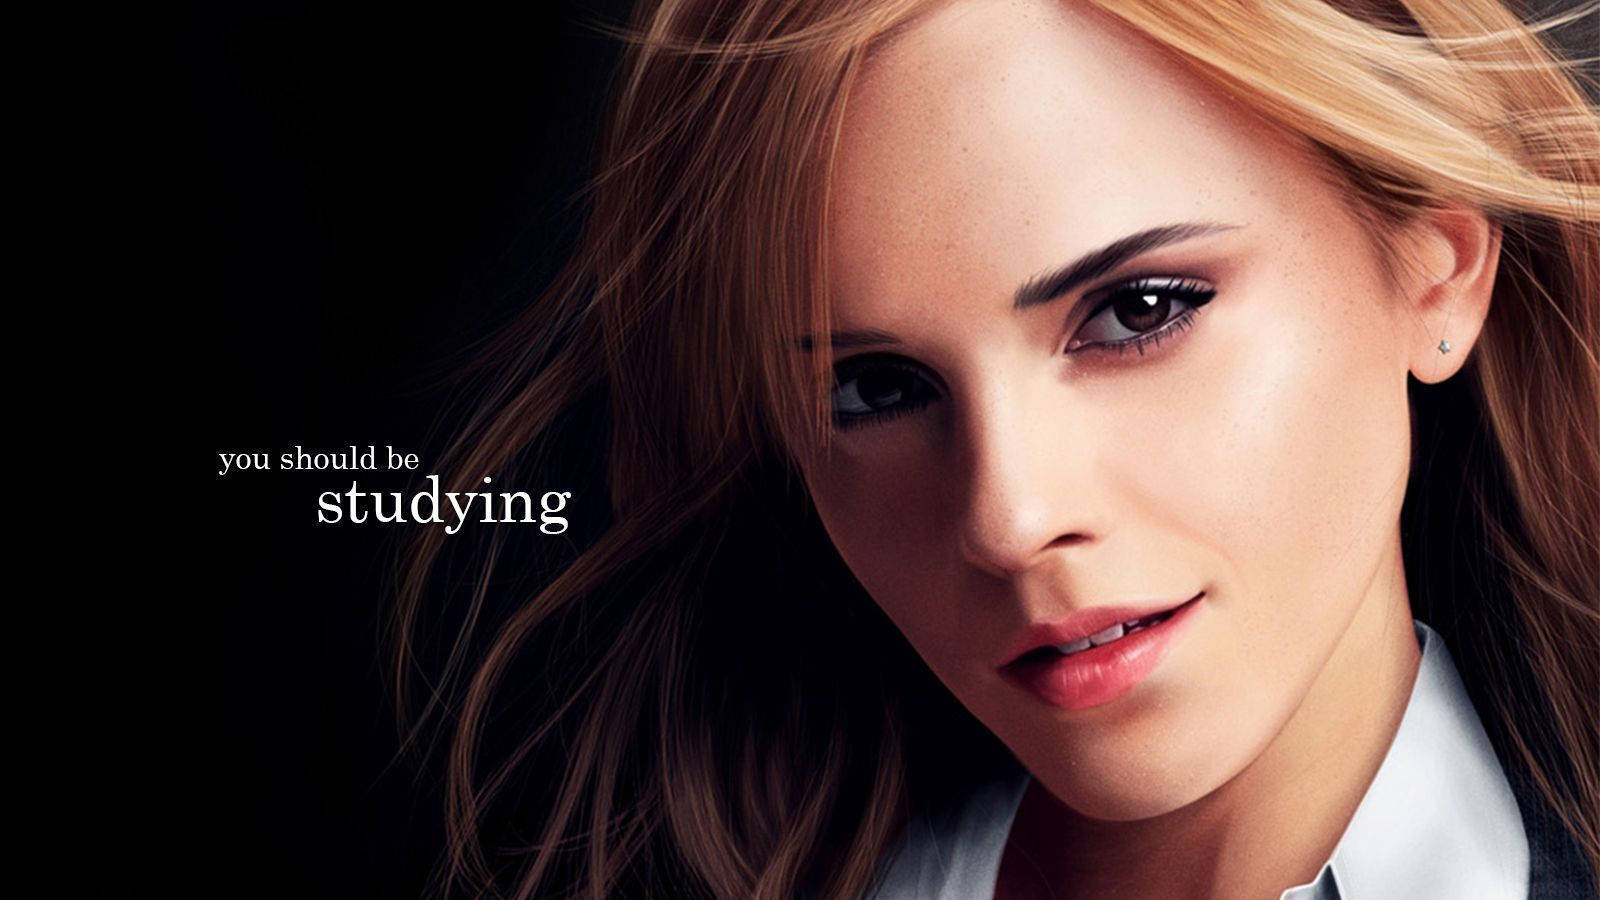 Emma Watson 1600X900 Wallpaper and Background Image